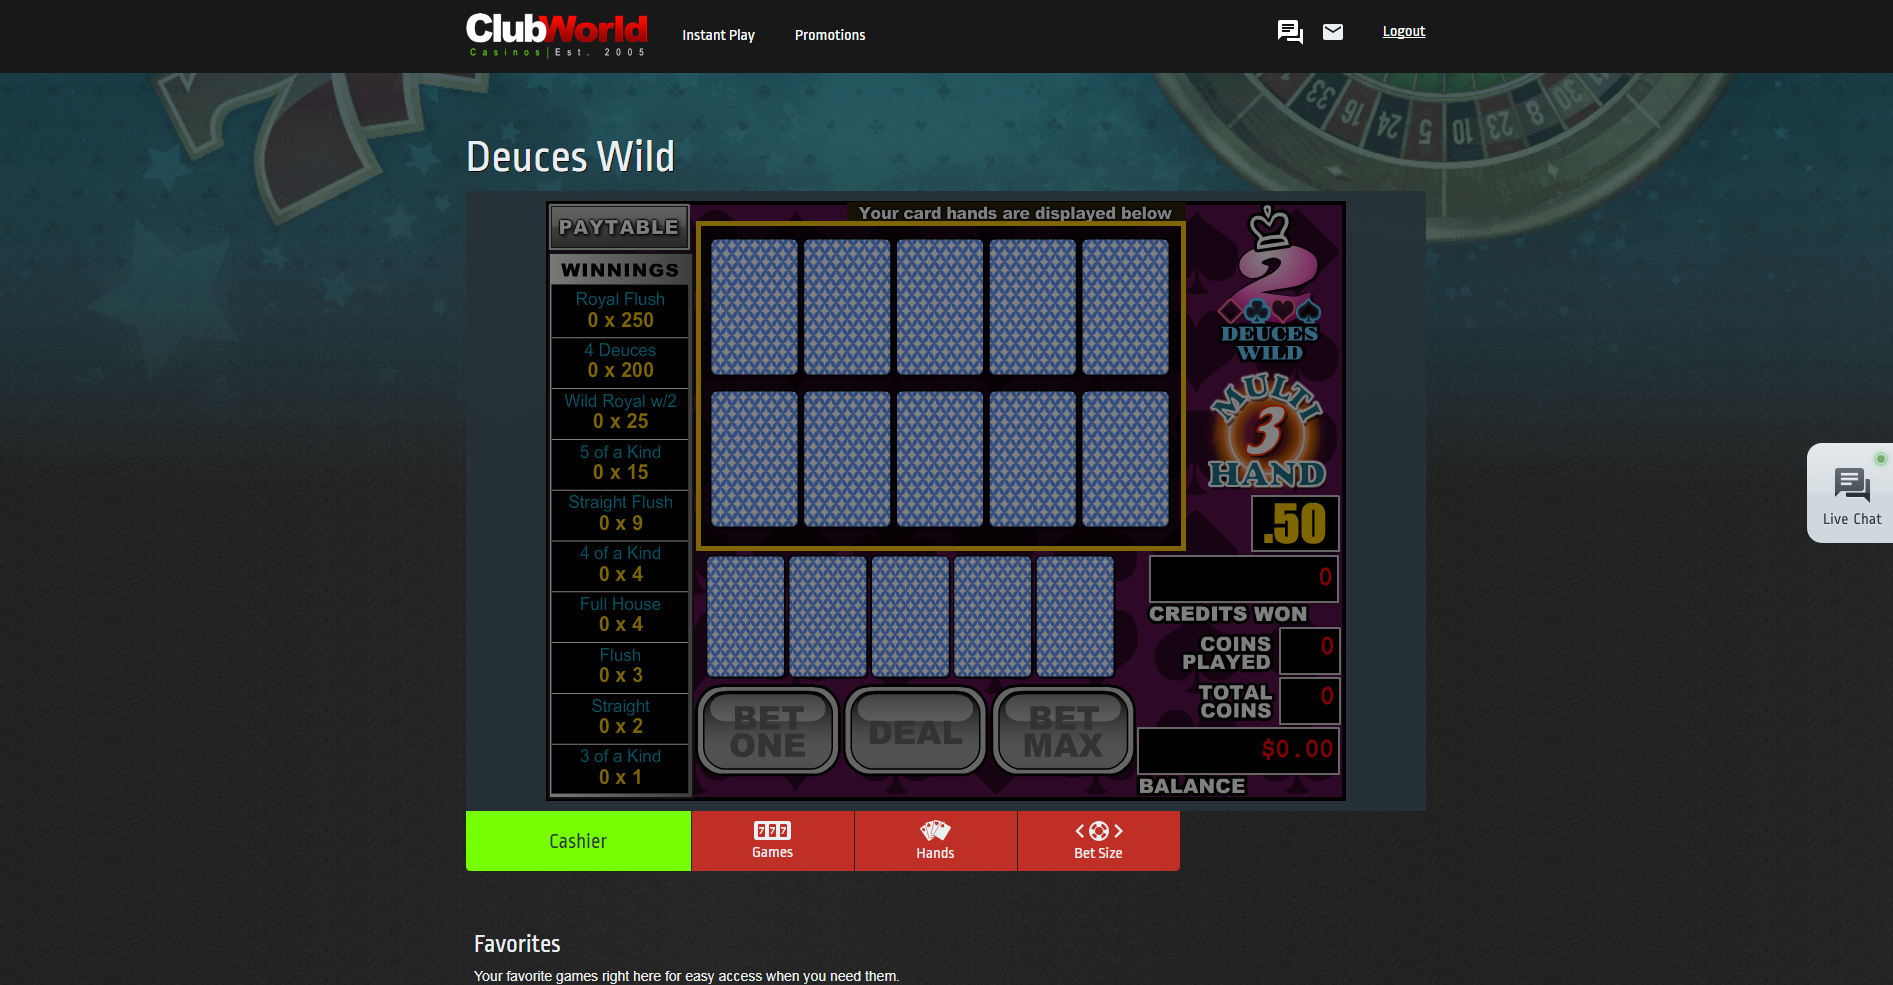 club world casino review